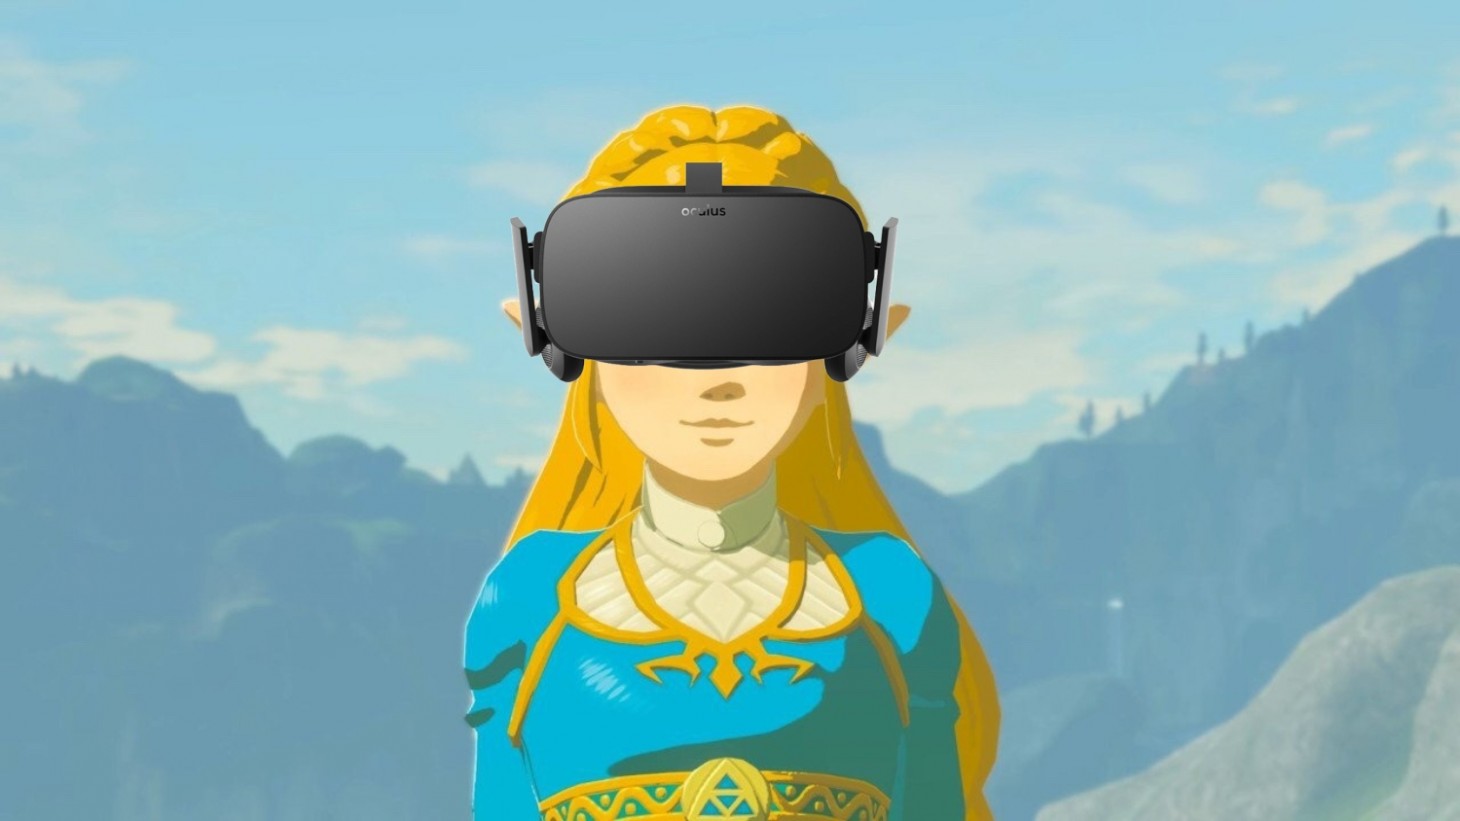 The Best Zelda Breath of the Wild Mods on PC